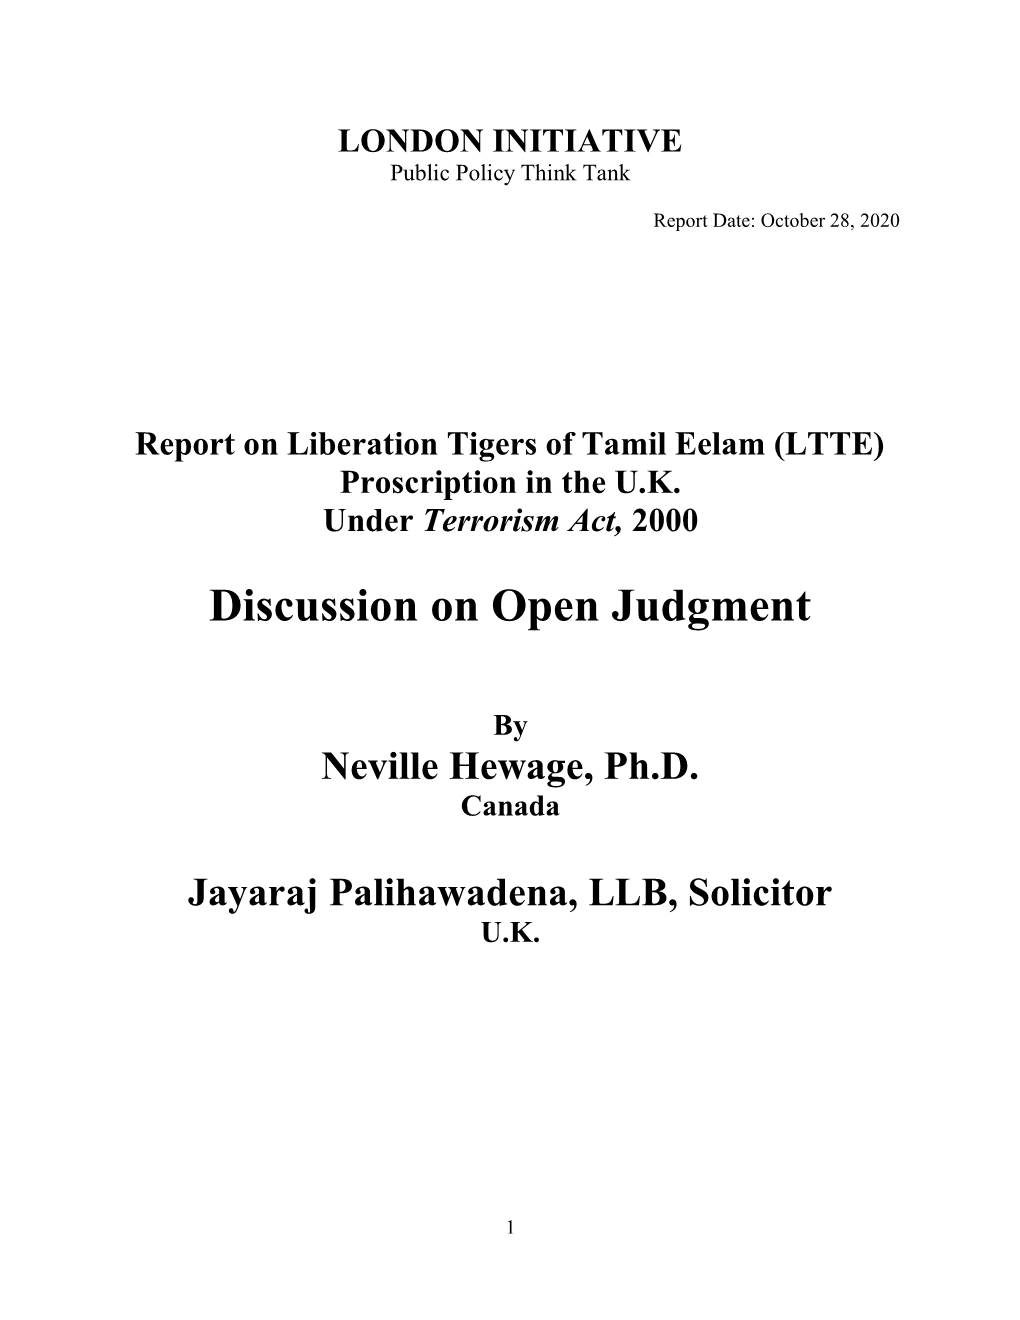 Report-On-LTTE-Proscription-UK.Pdf